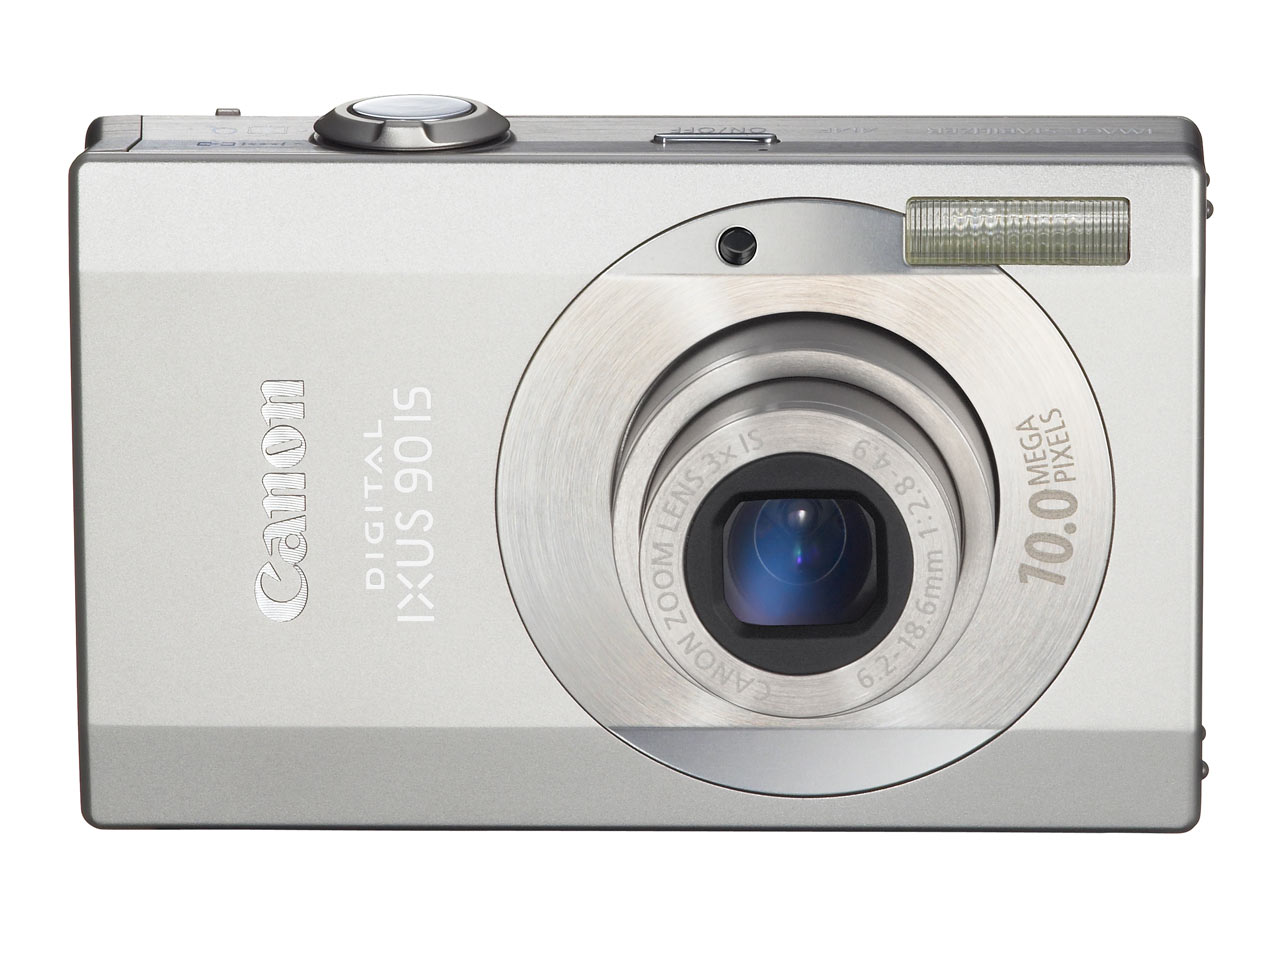 Canon Digital IXUS 90 Digital Camera